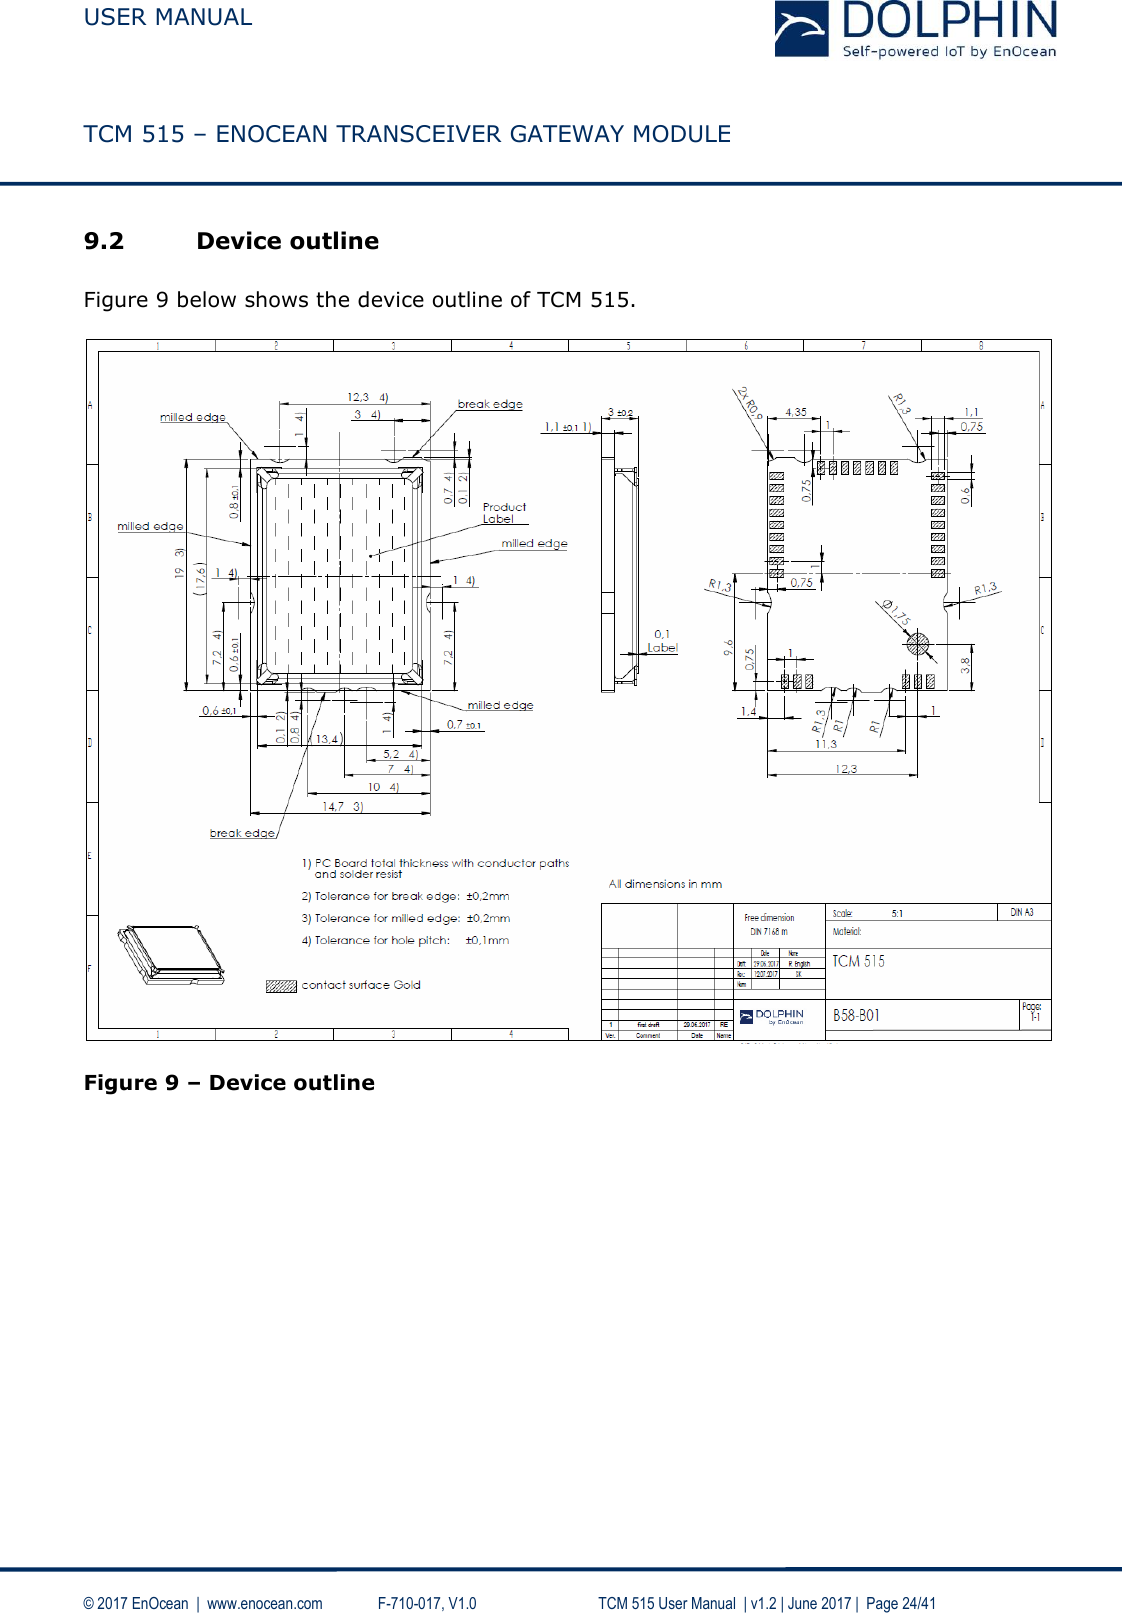  USER MANUAL    TCM 515 – ENOCEAN TRANSCEIVER GATEWAY MODULE  © 2017 EnOcean  |  www.enocean.com   F-710-017, V1.0        TCM 515 User Manual  | v1.2 | June 2017 |  Page 24/41  9.2 Device outline  Figure 9 below shows the device outline of TCM 515.     Figure 9 – Device outline        